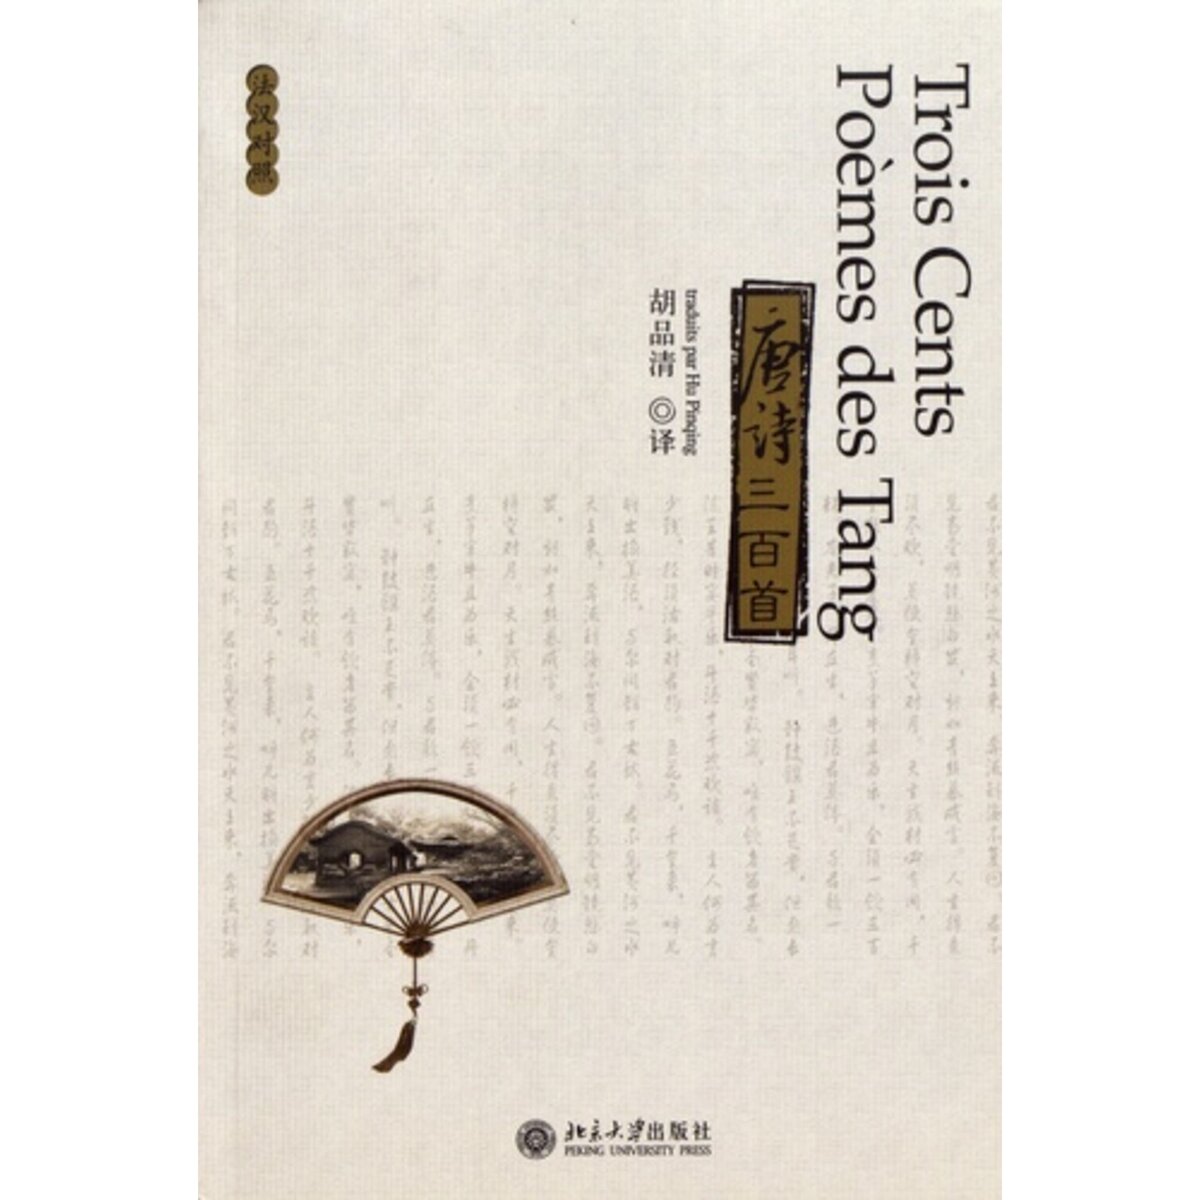  TROIS CENT POEMES DES TANG. EDITION BILINGUE FRANCAIS-CHINOIS, Hu Pinqing